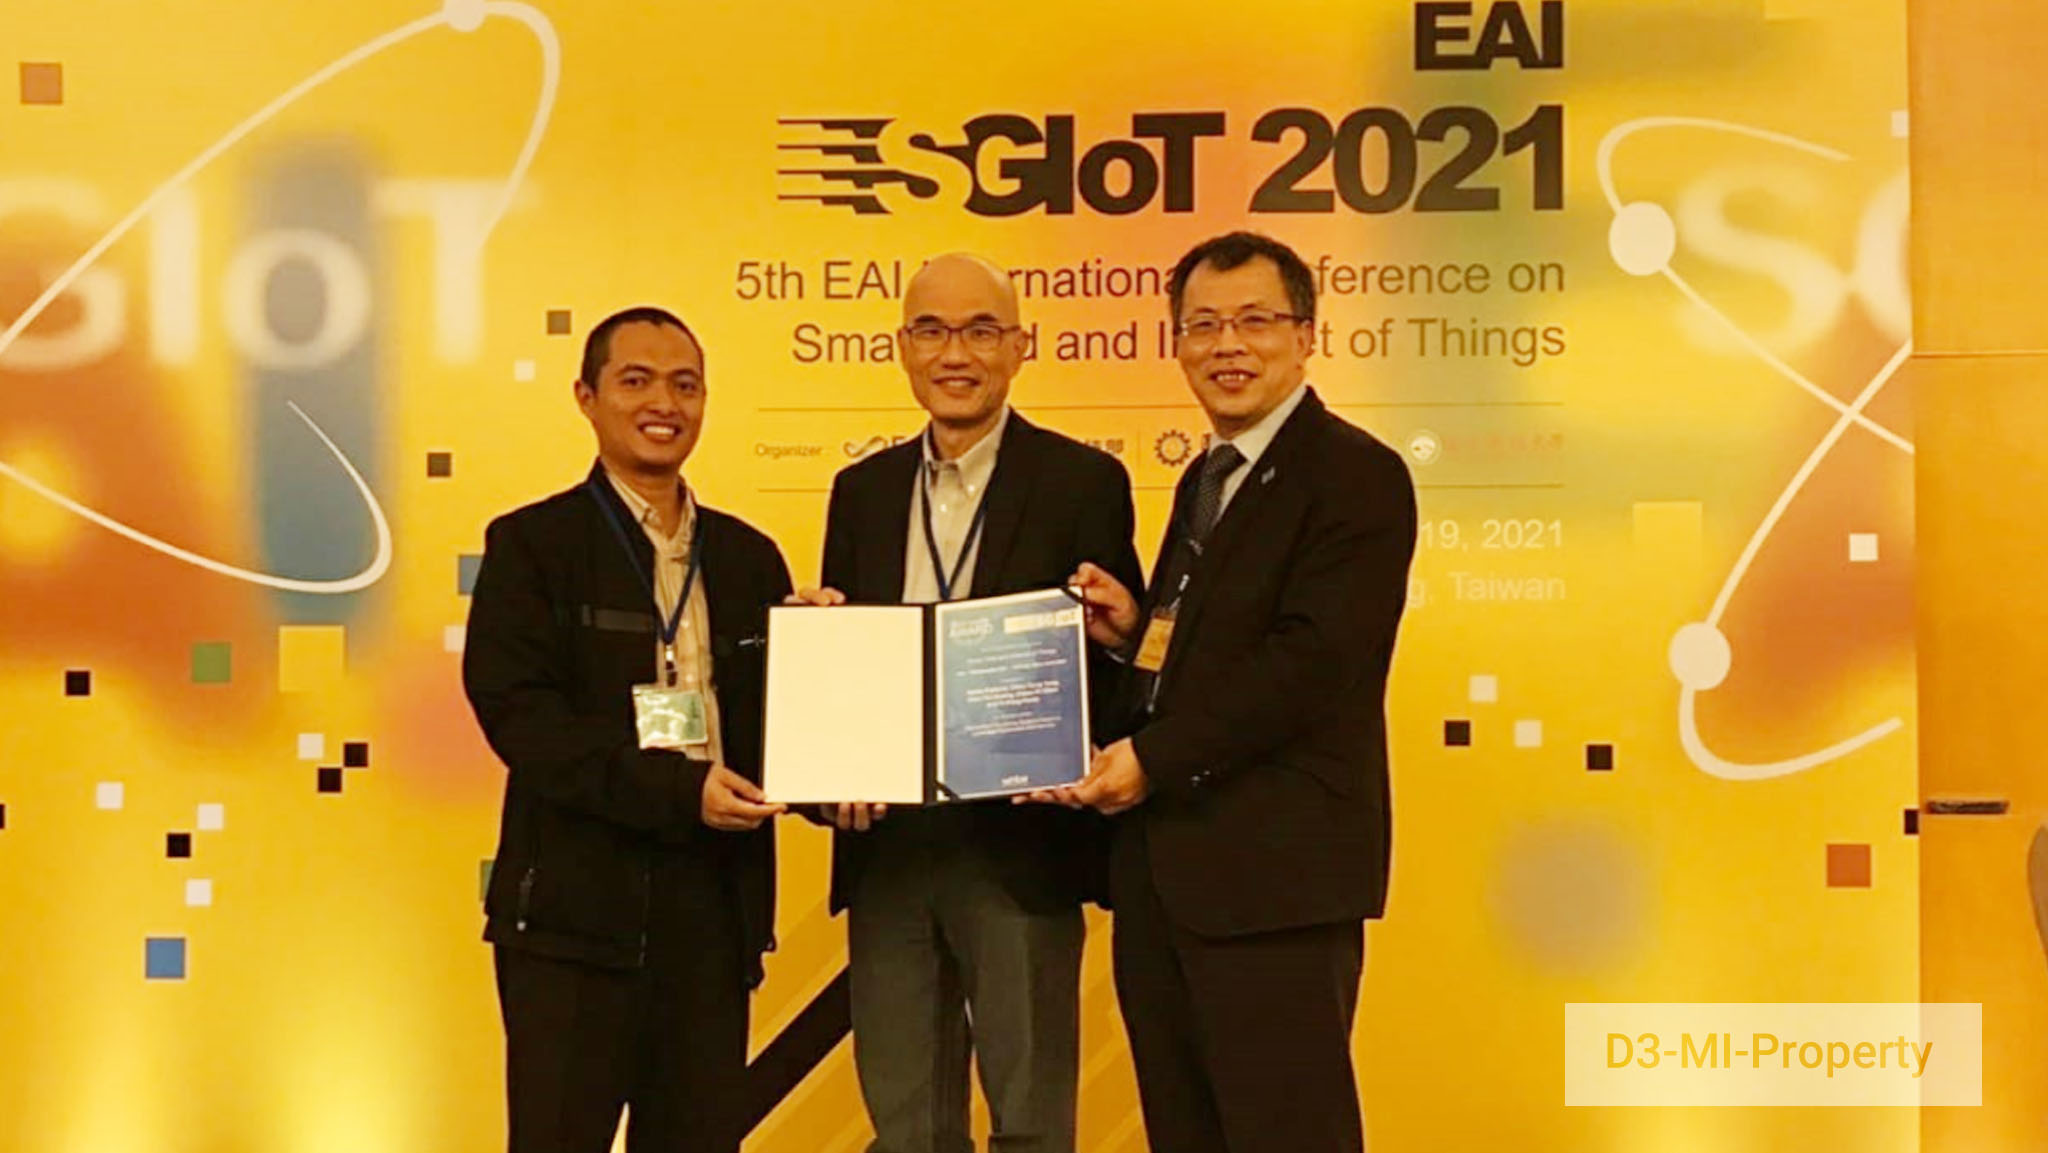 Dosen manajemen Informatika Politeknik Negeri Lampung yang merupakan mahasiswa PhD Tunghai university Taiwan. Mendapatkan Best Paper Award di EAI SGIoT 2021